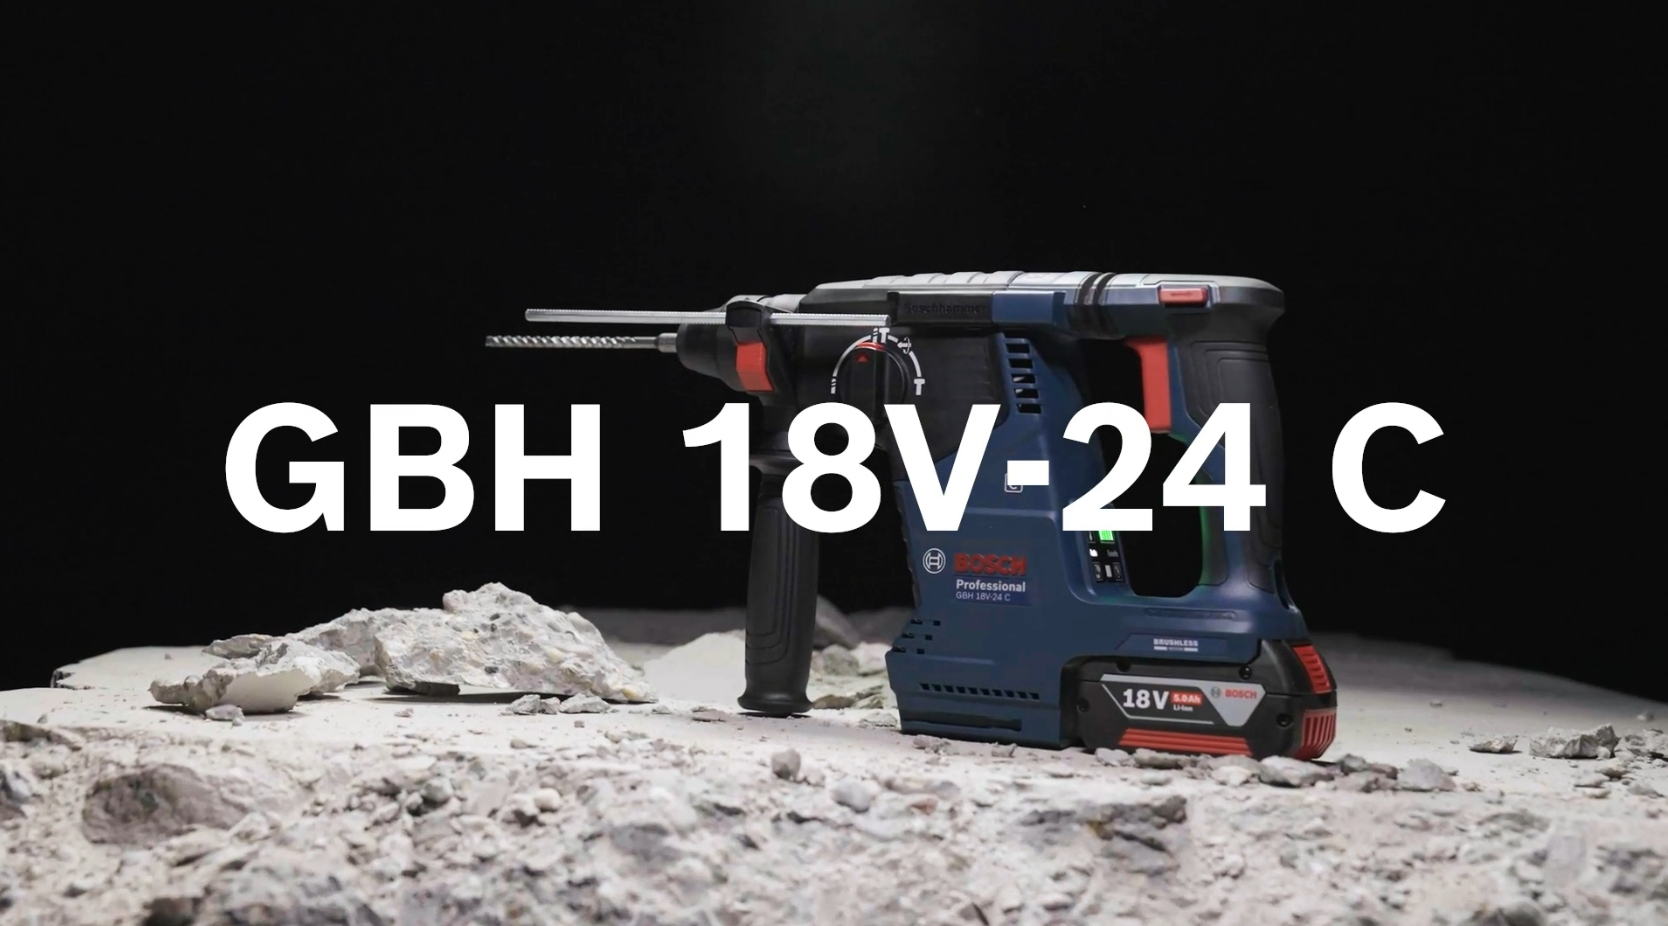 kaufen C GBH Bosch in L-BOXX Professional 18V-24